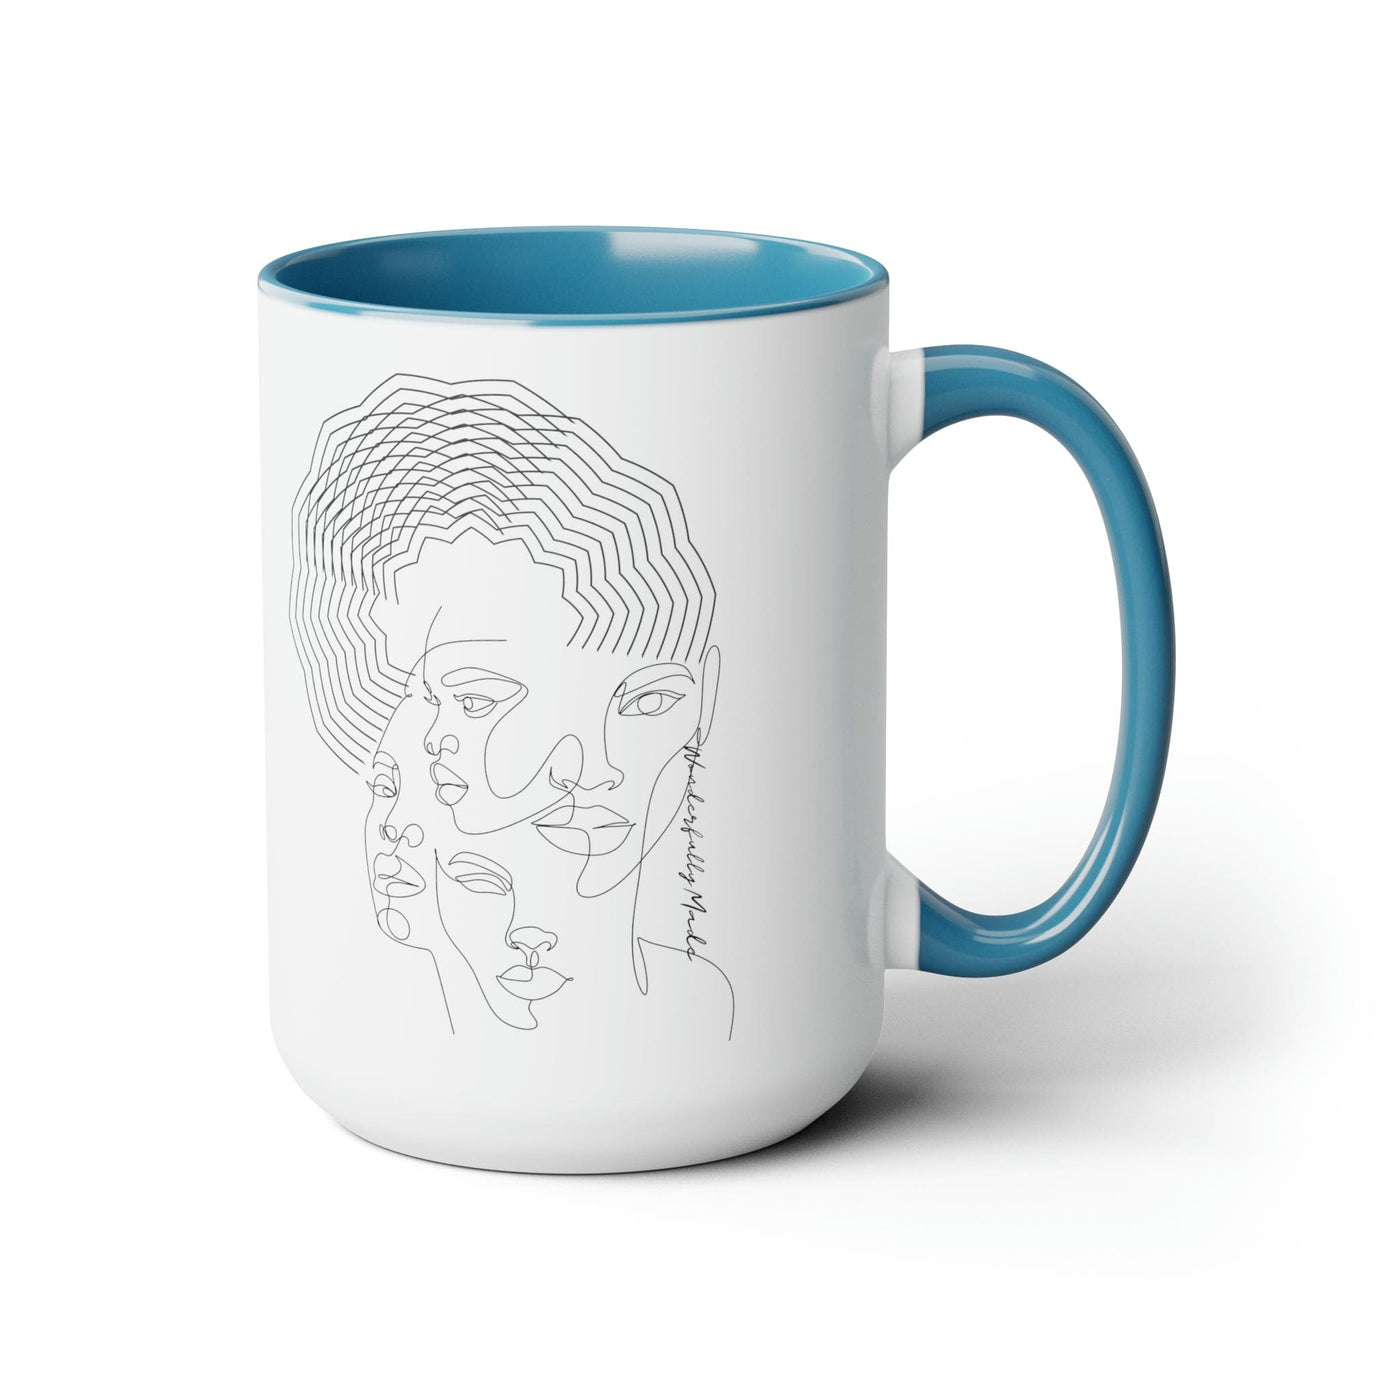 Accent Ceramic Coffee Mug 15oz - Every Woman Is Wonderfully Made Black